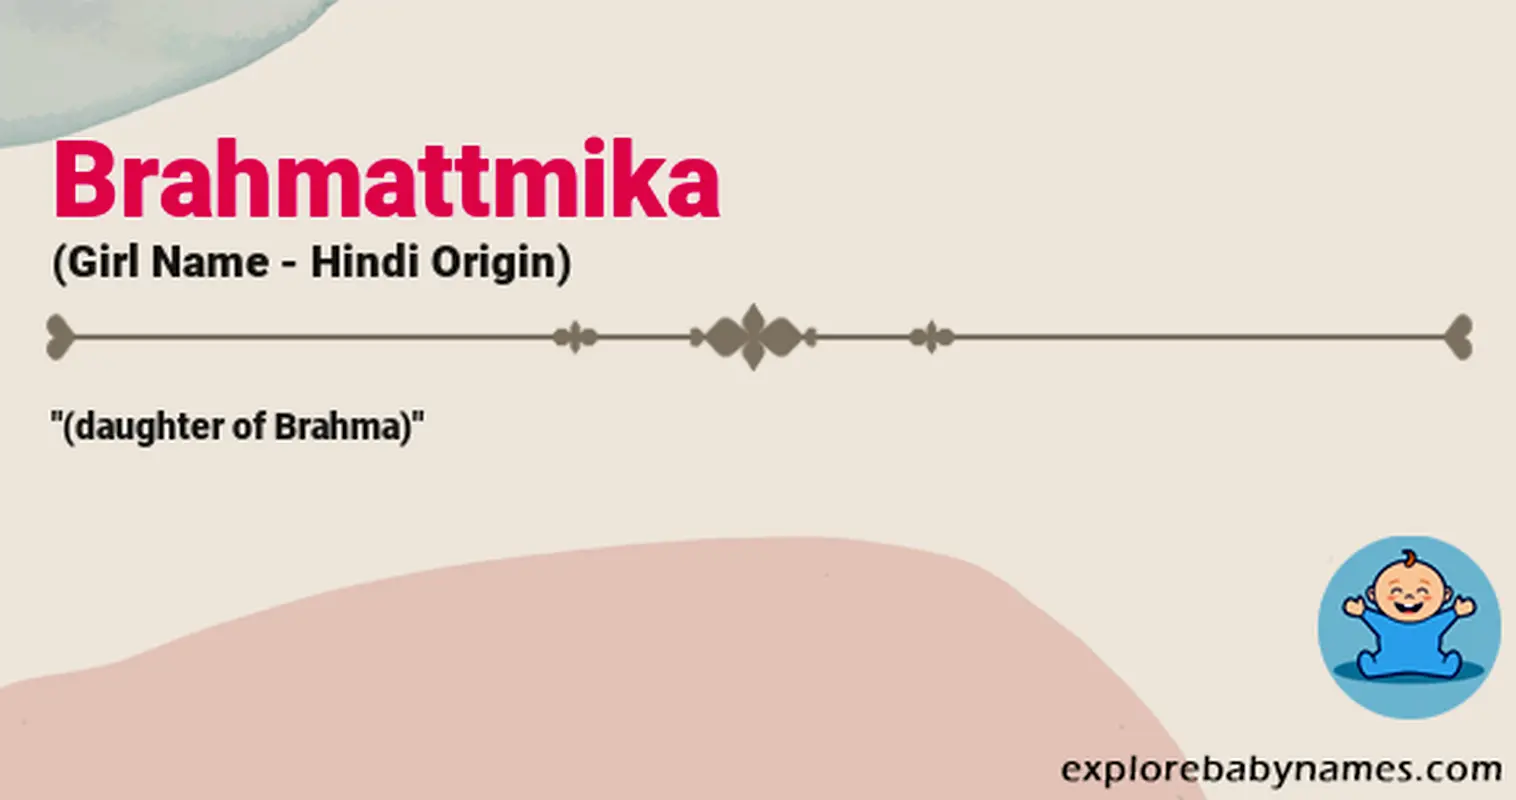 Meaning of Brahmattmika